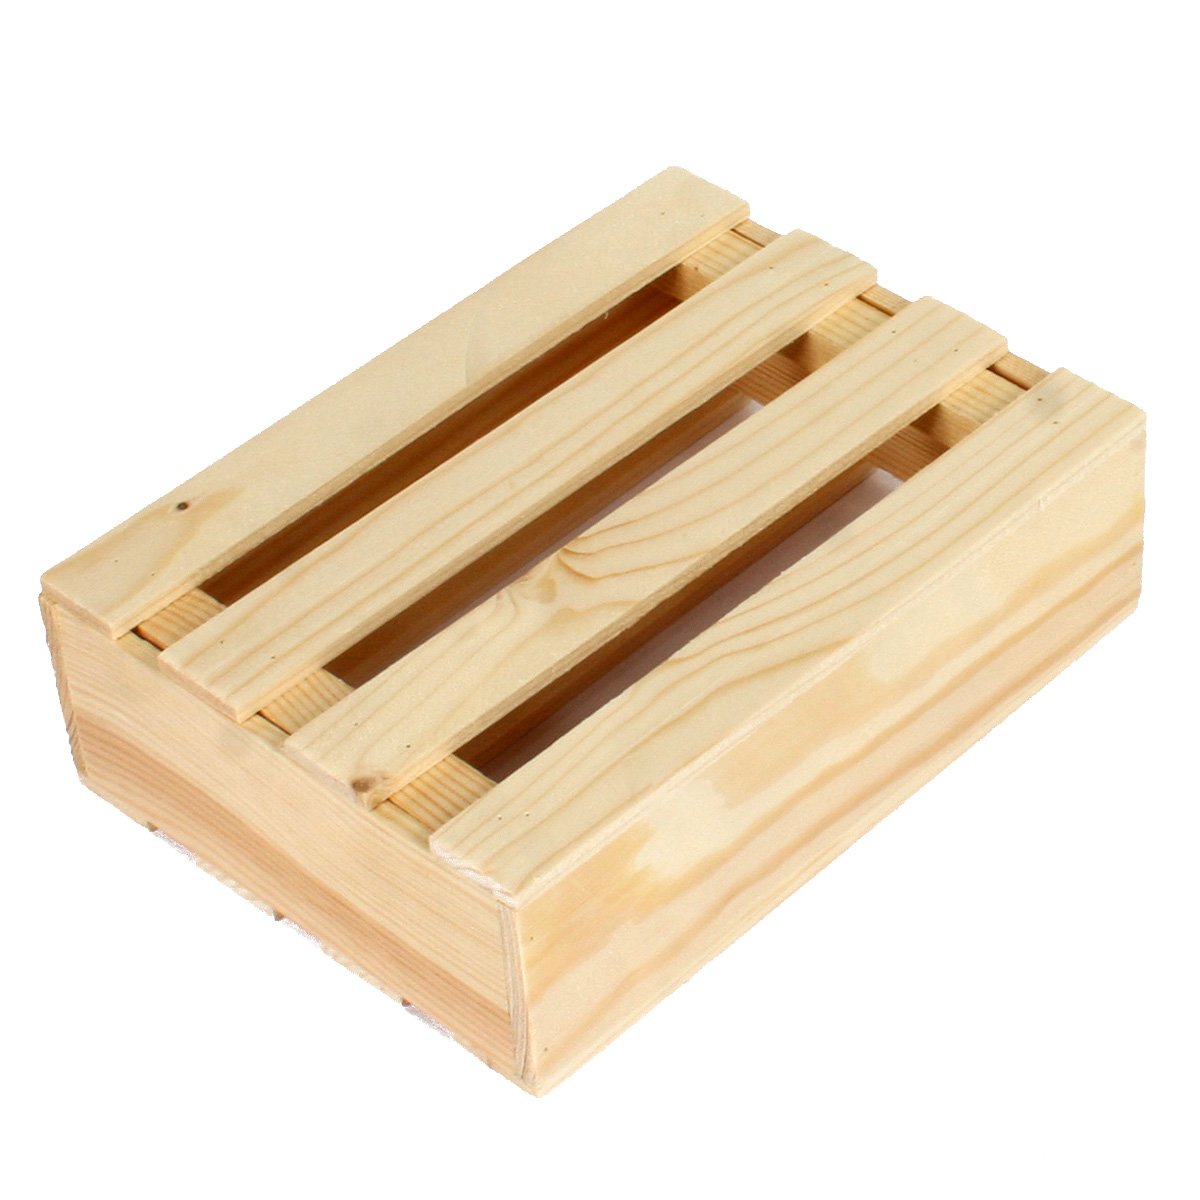 Коробка деревянная Grand Gift 303 прямоугольная с крышкой 22,5х16,5х7 см коробка пенал подарочная деревянная 20×14×8 см